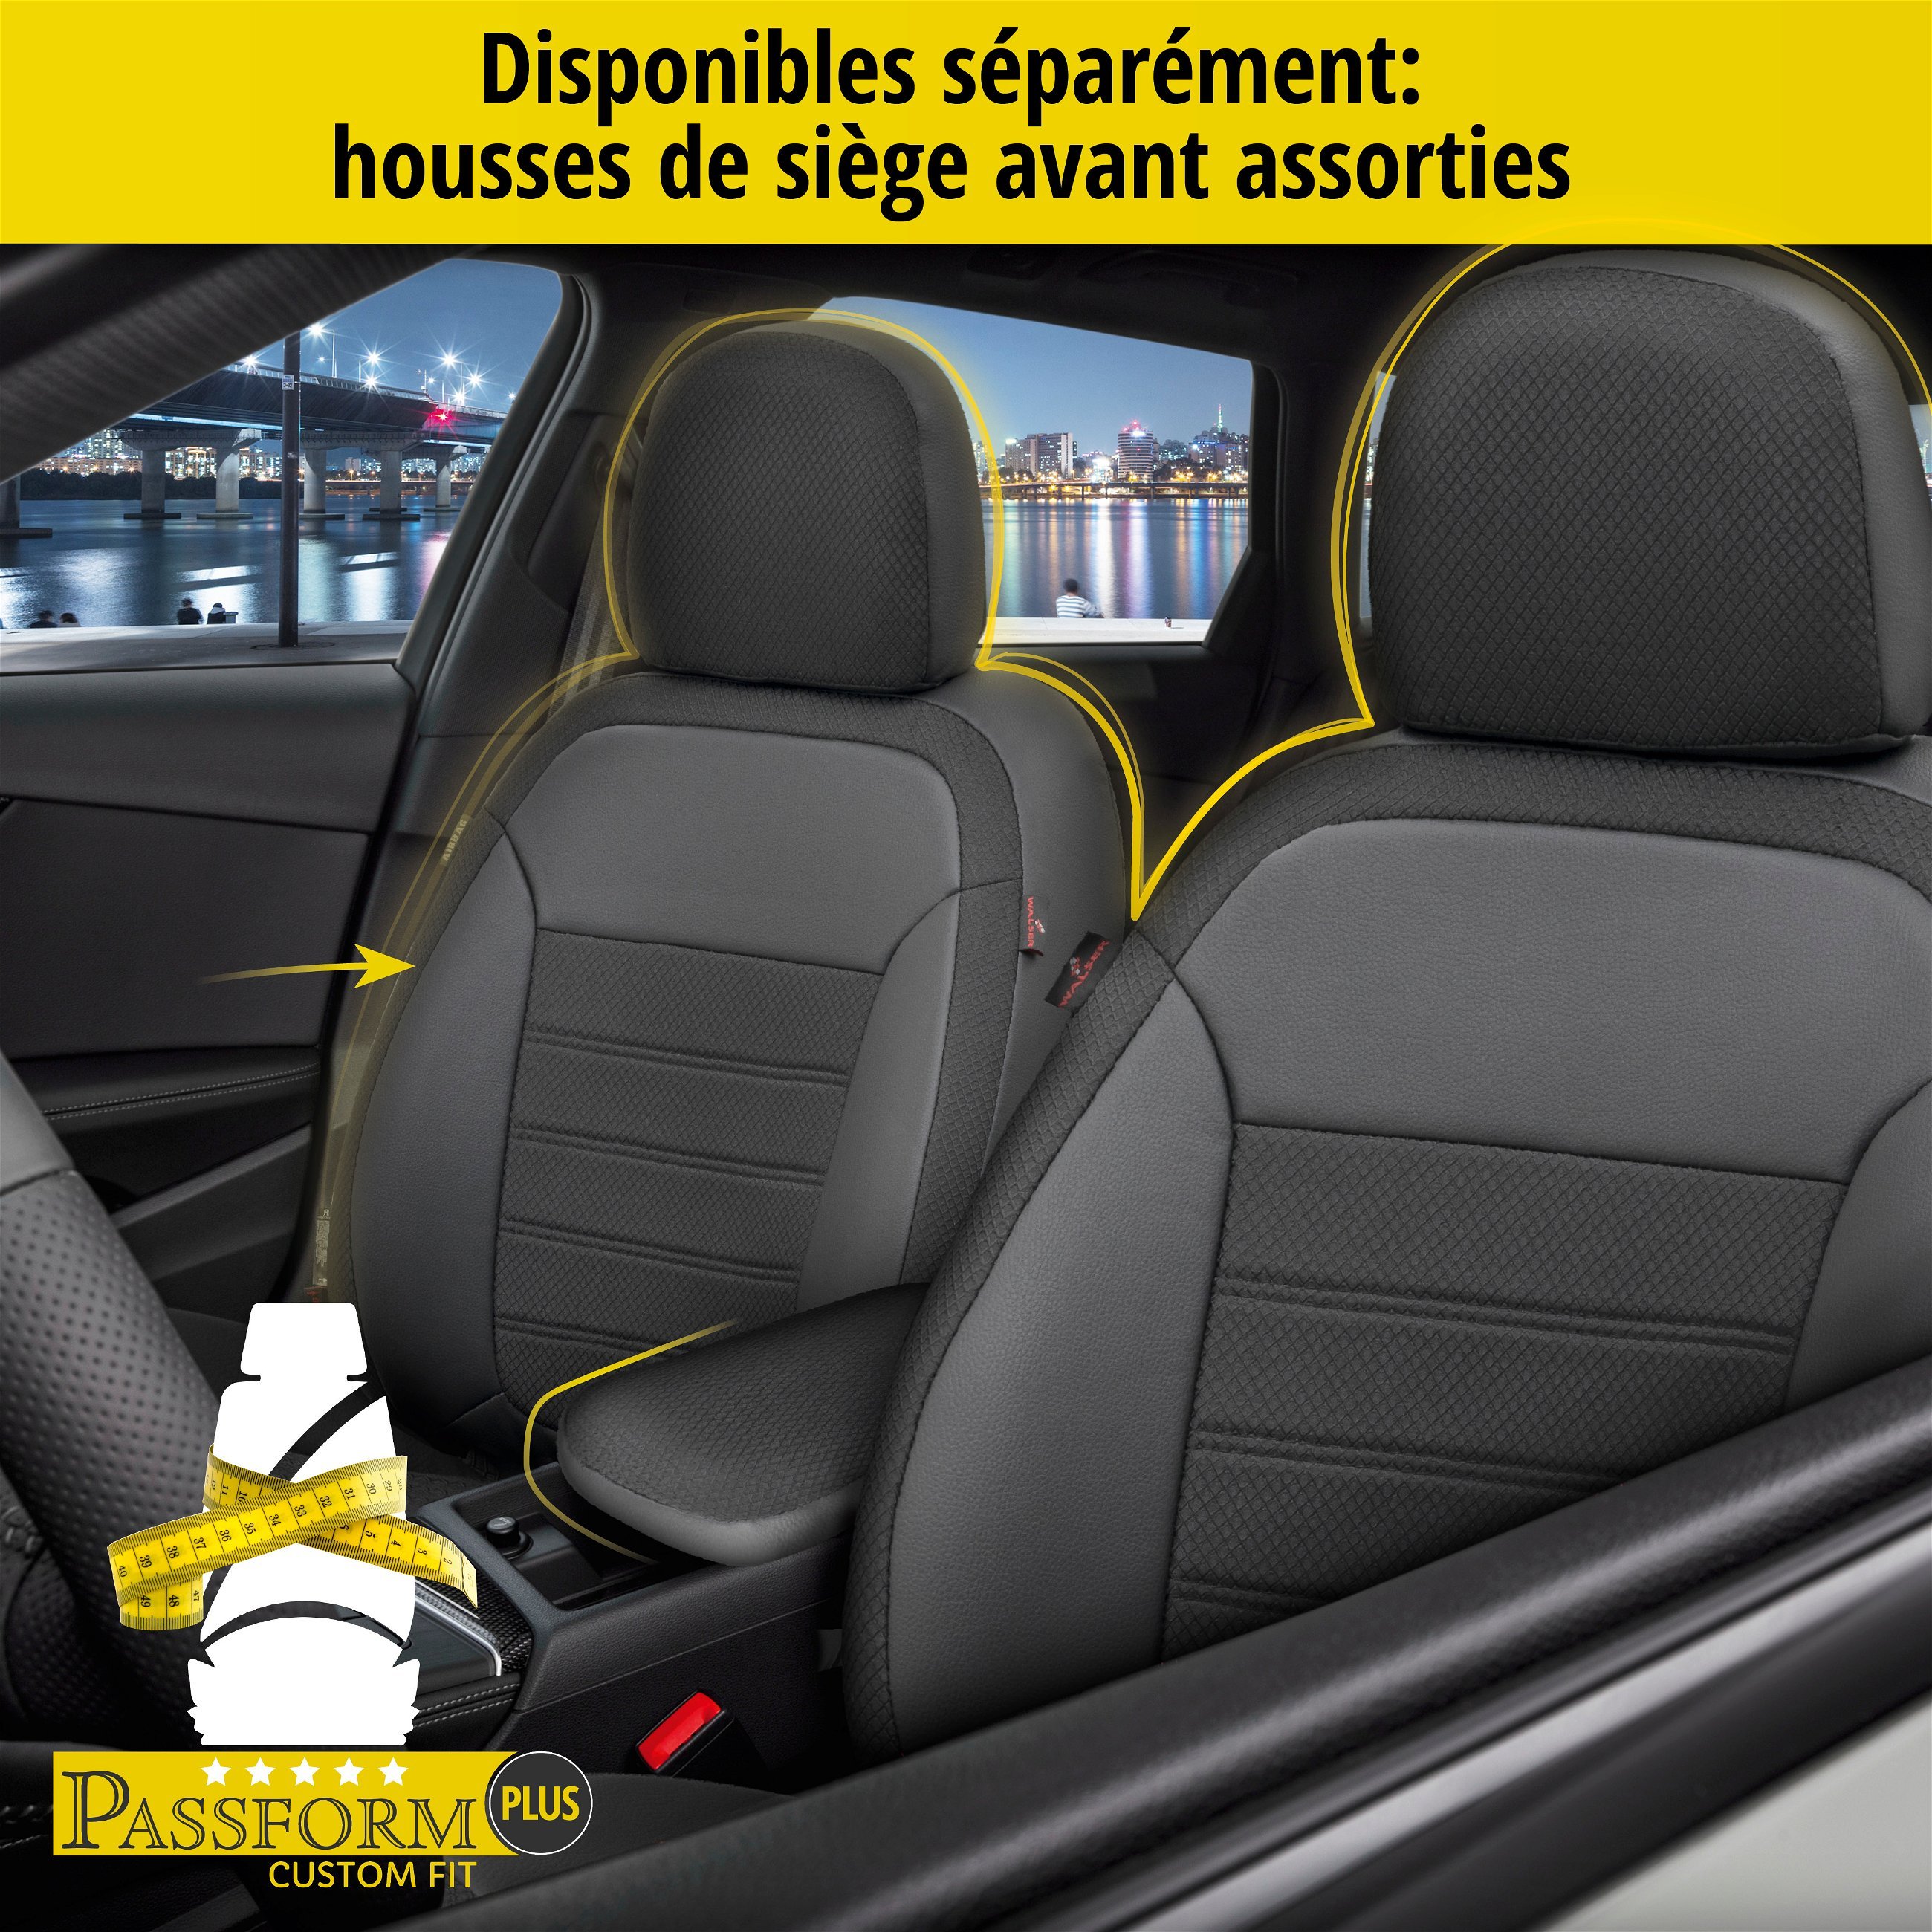 Housse de siège Aversa pour Opel Astra J (P10) 09/2009-10/2015, 1 housse de siège arrière pour les sièges sport